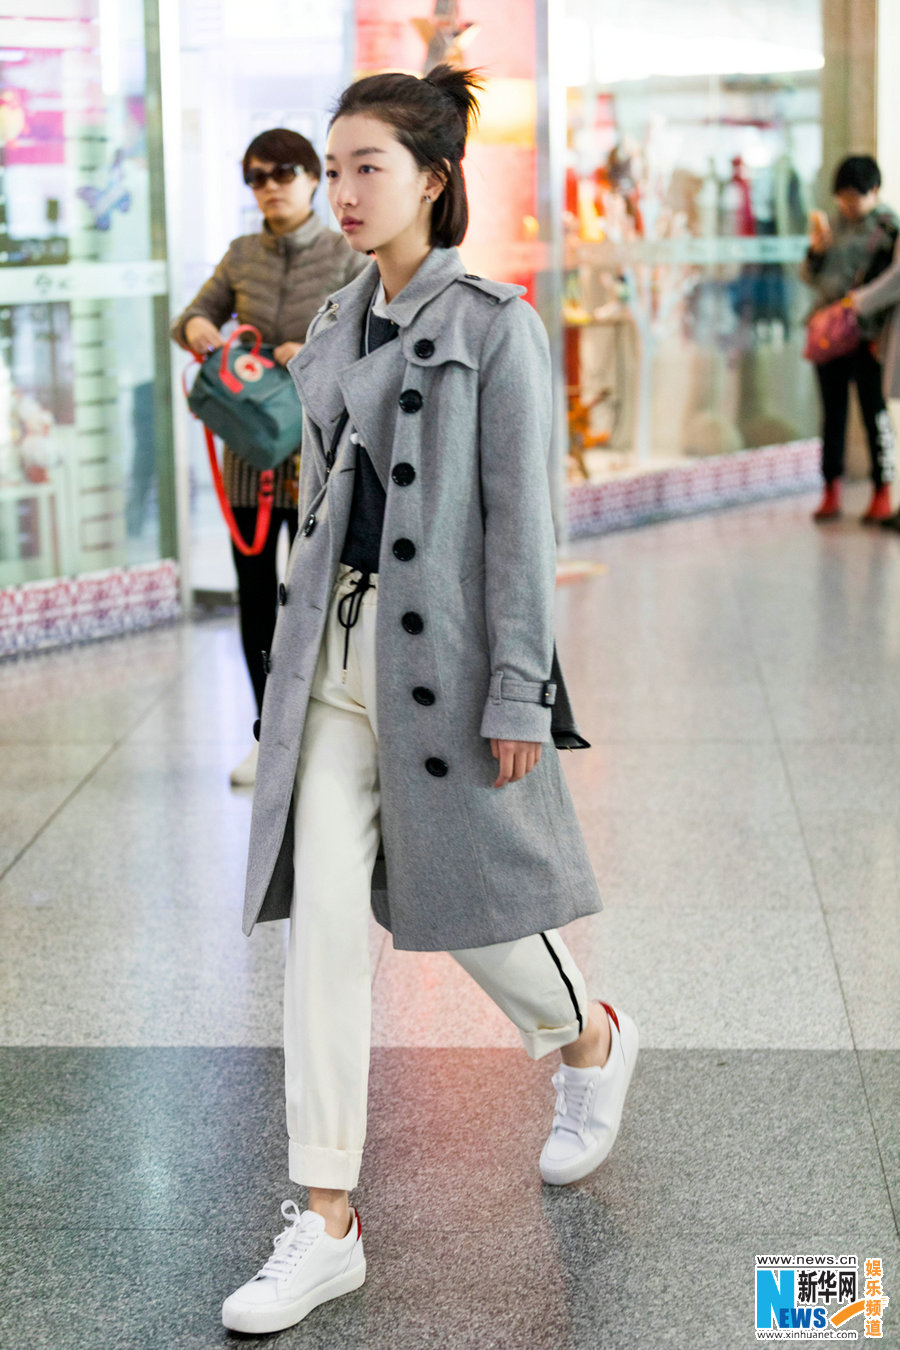 China Entertainment News: Zhou Dongyu heading to London Fashion Week